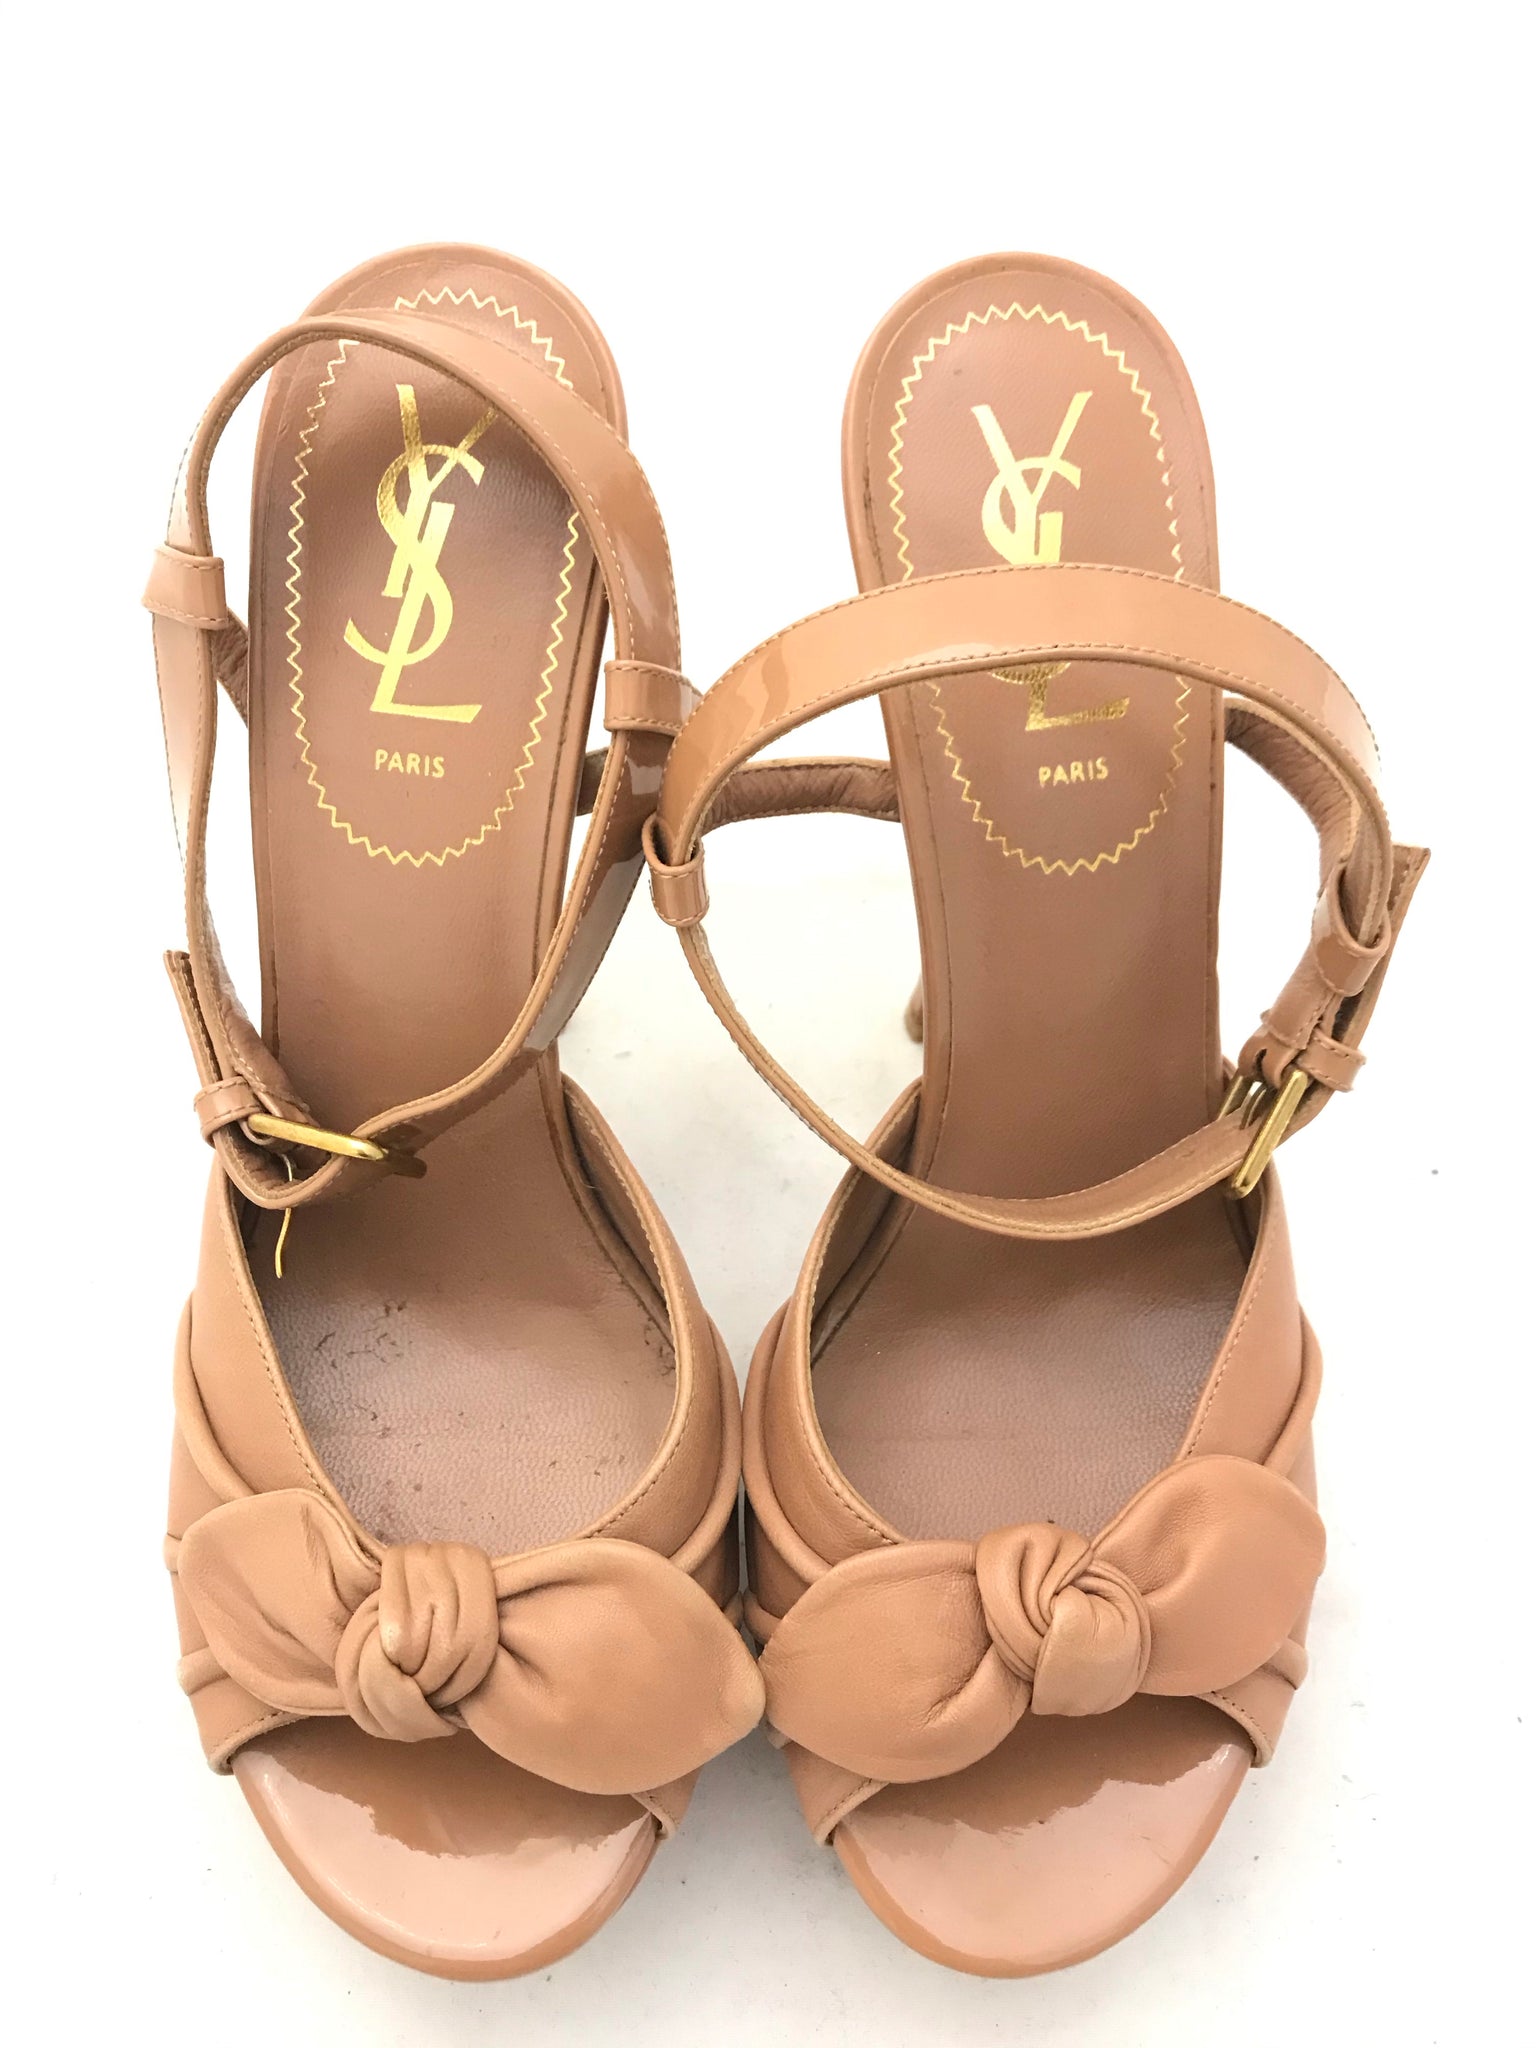 Isabella's Wardrobe Yves Saint Laurent Poppy Platform Sandals.